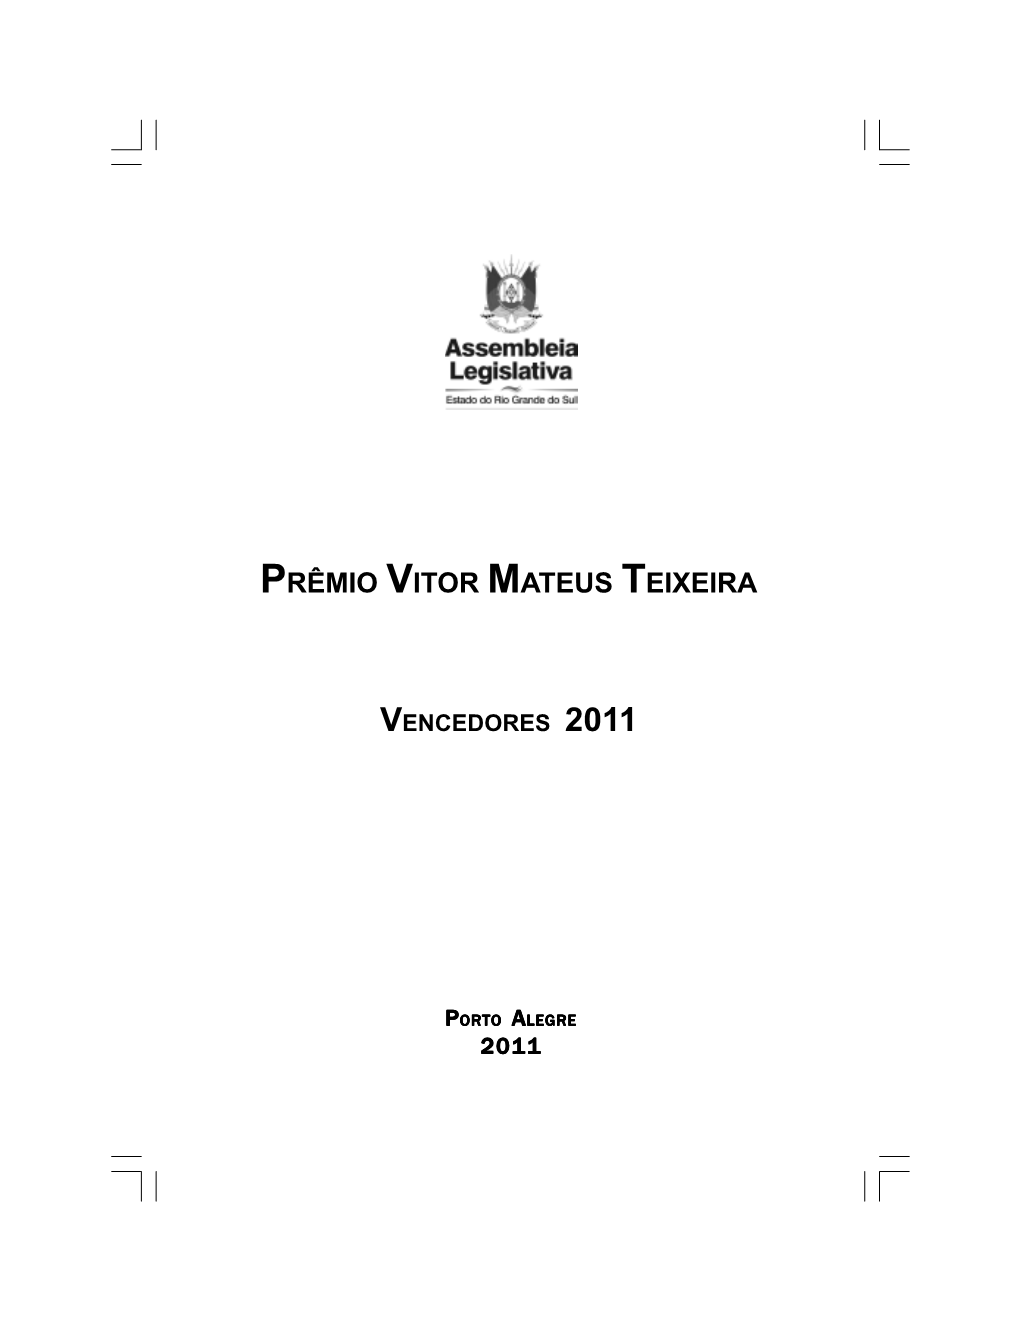 Prêmio Vitor Mateus Teixeira